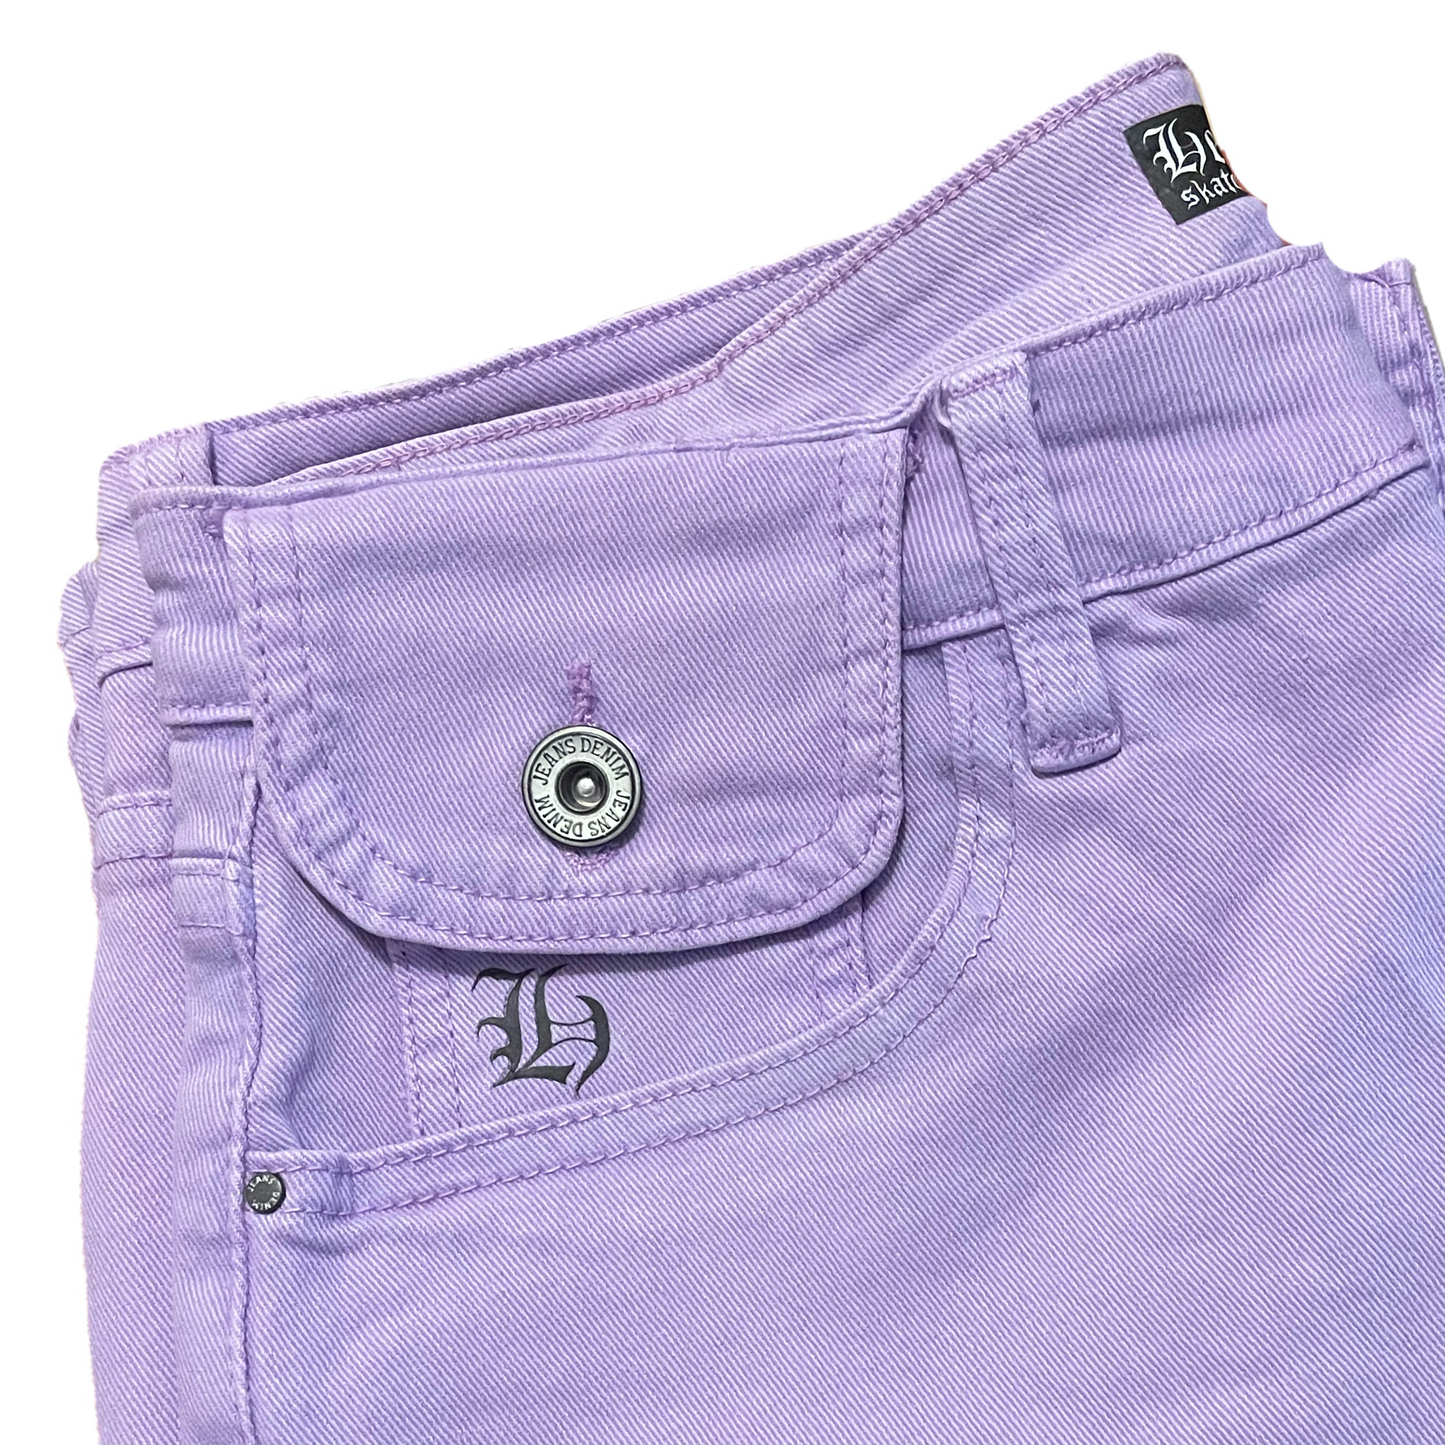 High-waist loose jeans - purple